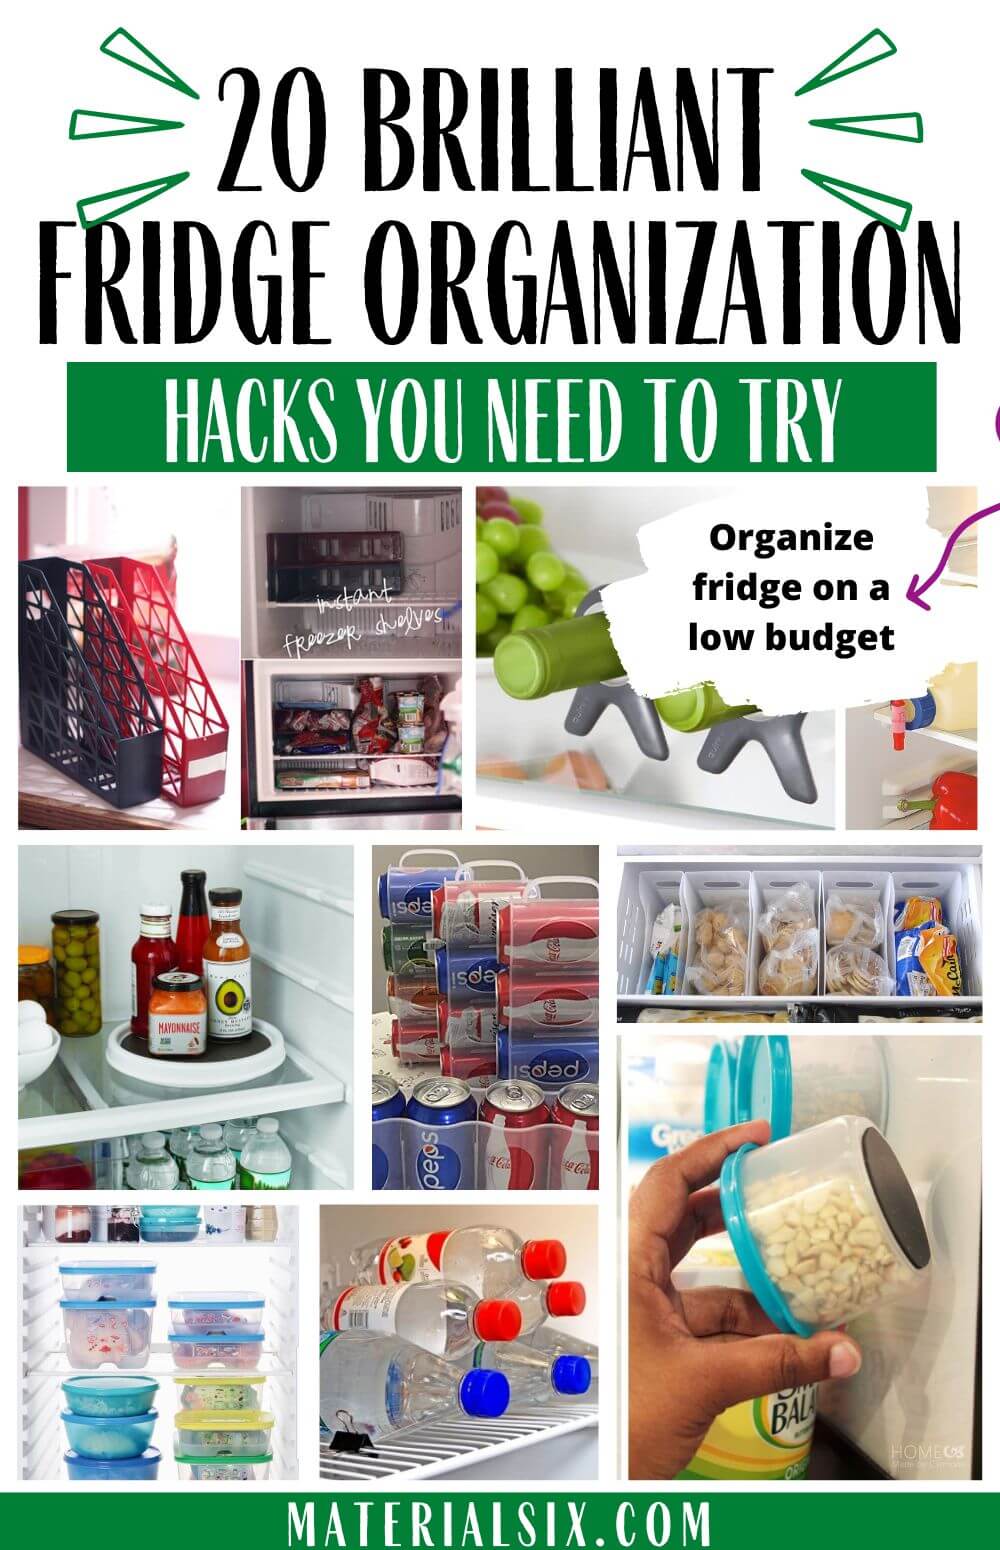 20 Brilliant Fridge Organization Hacks You Need to Try